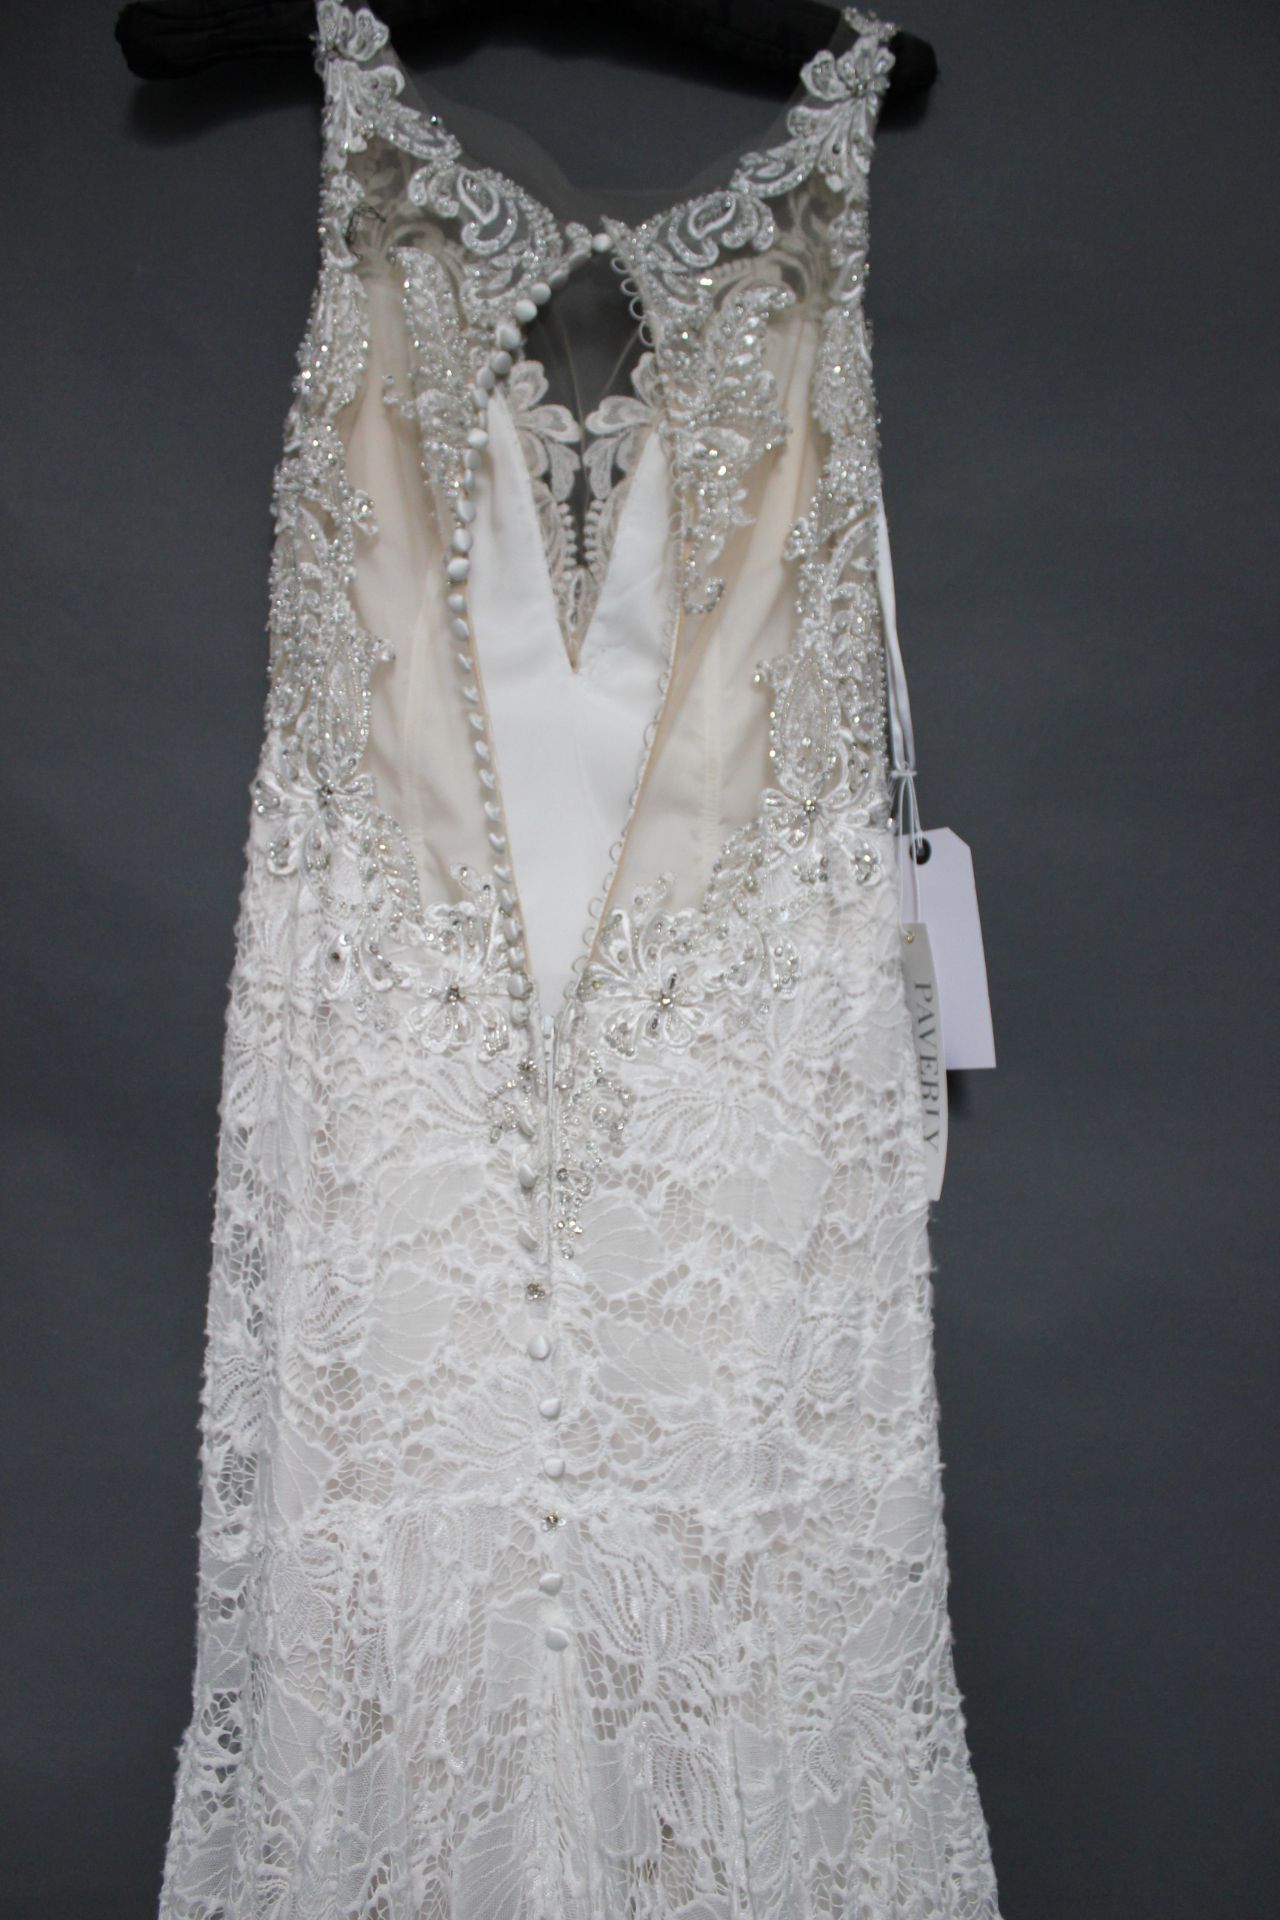 1 x ALLURE BRIDAL Stunning Lace And Beaded Plunge Neckline Designer Wedding Dress RRP £1,200 UK10 - Image 6 of 10